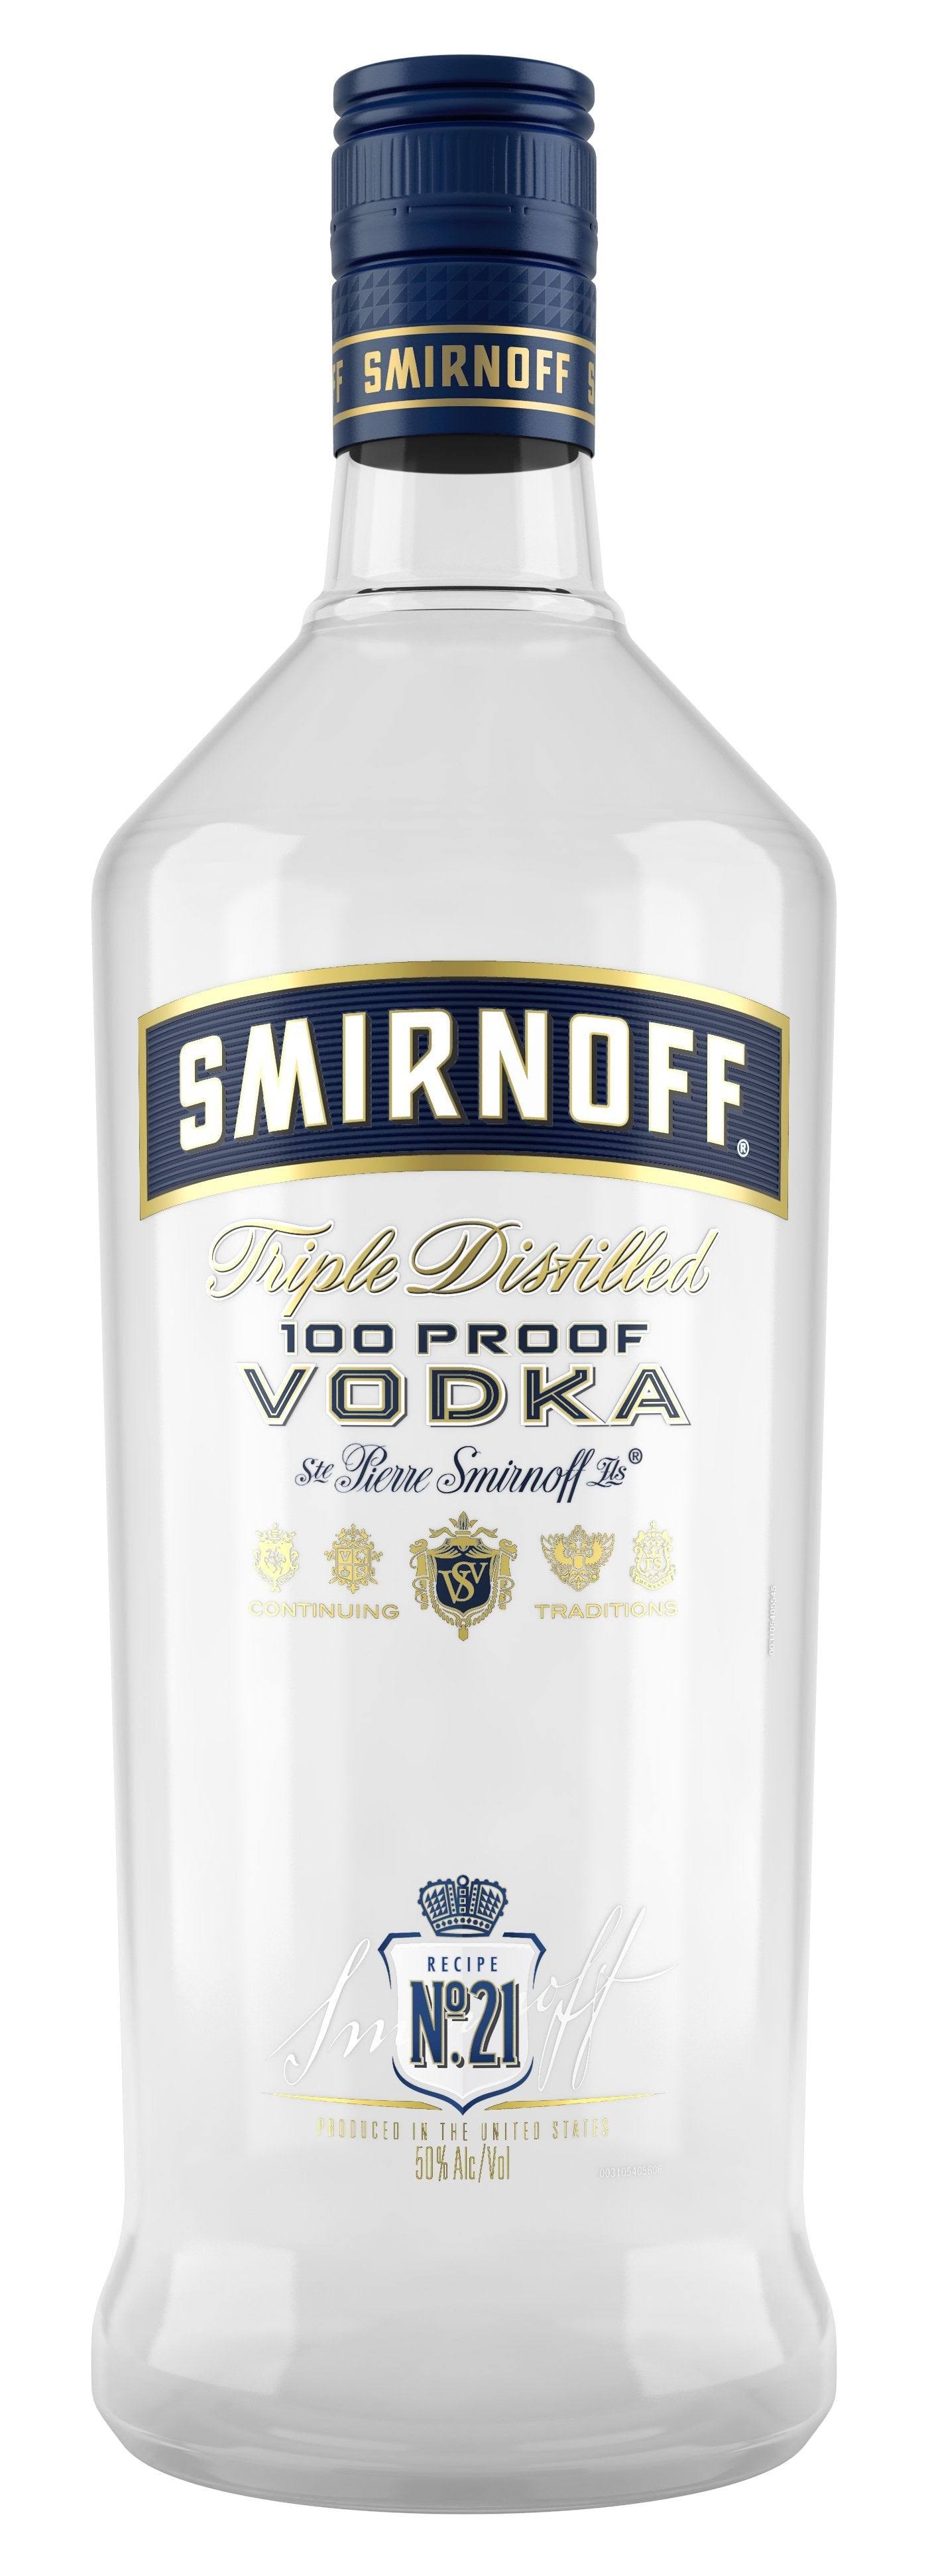 Smirnoff Vodka, Triple Distilled, 100 Proof - 1.75 lt